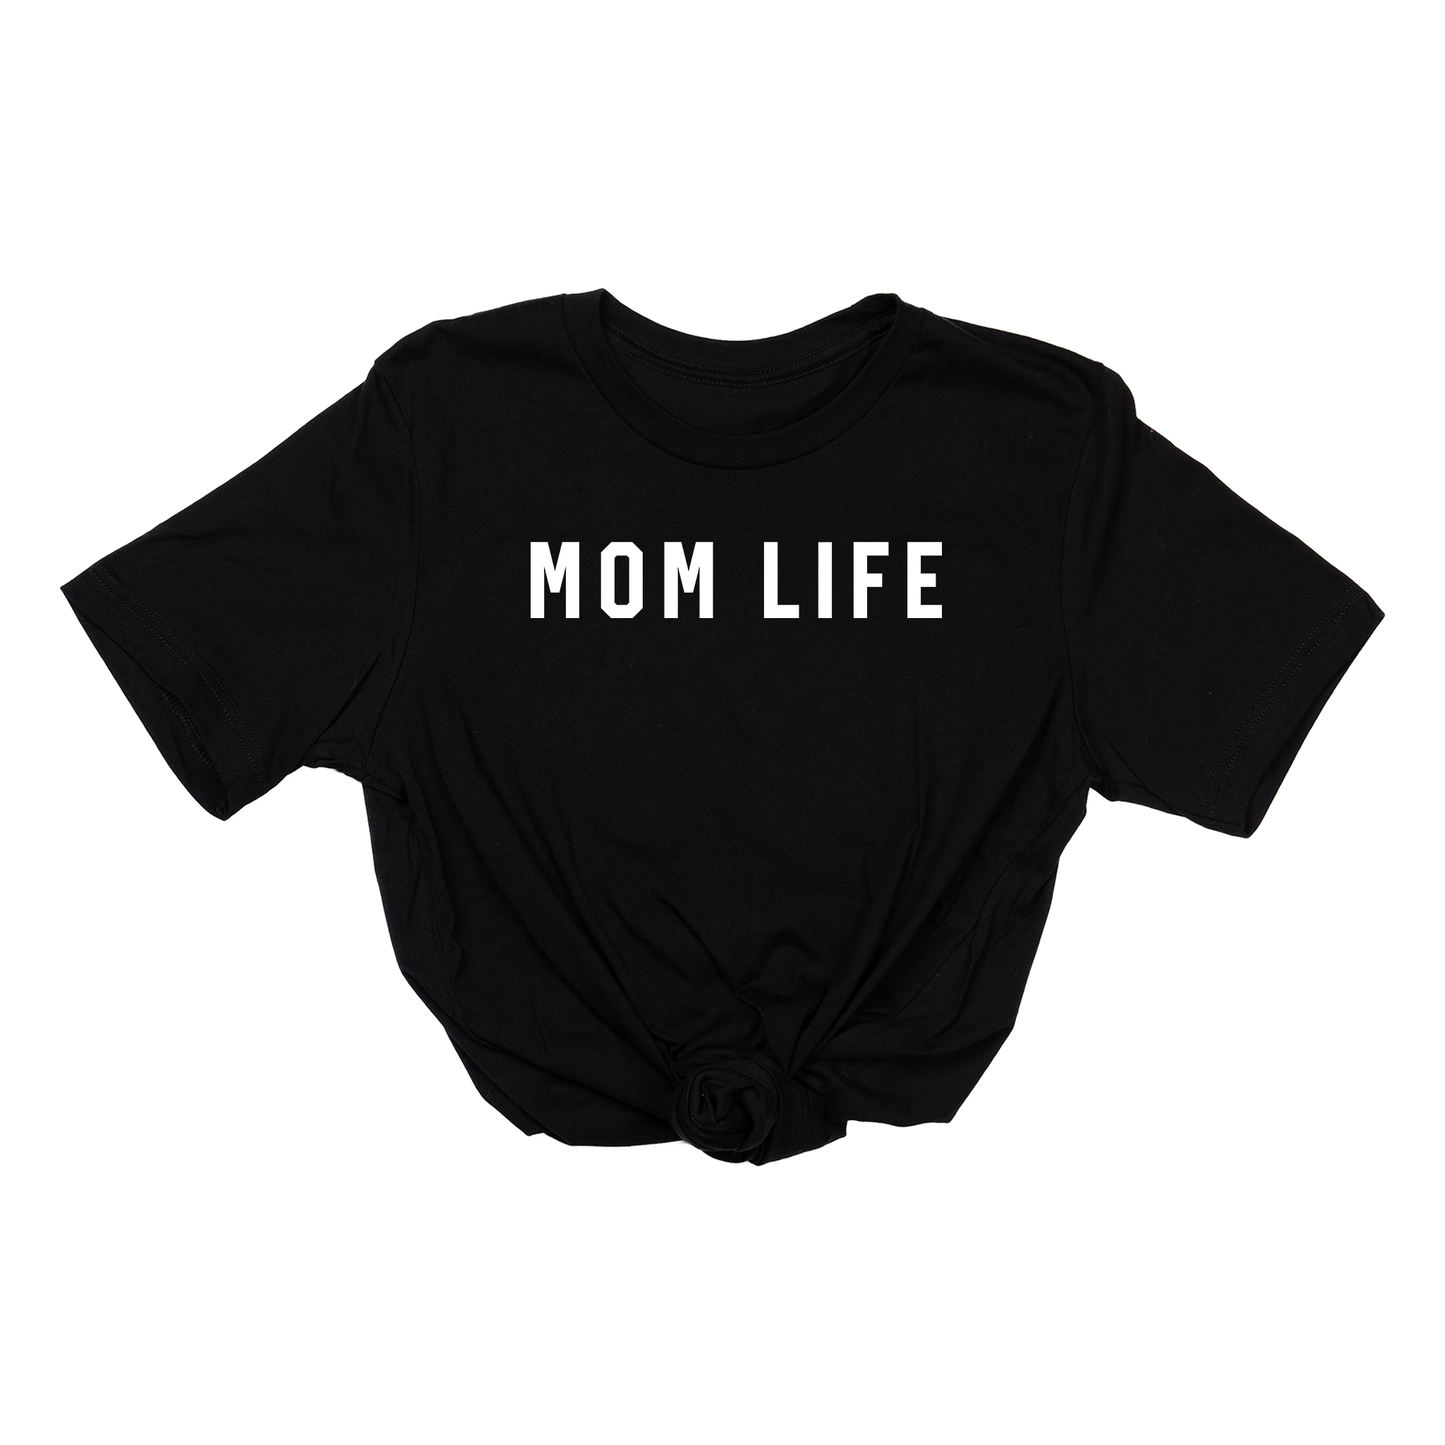 Mom Life (Across Front, White) - Tee (Black)